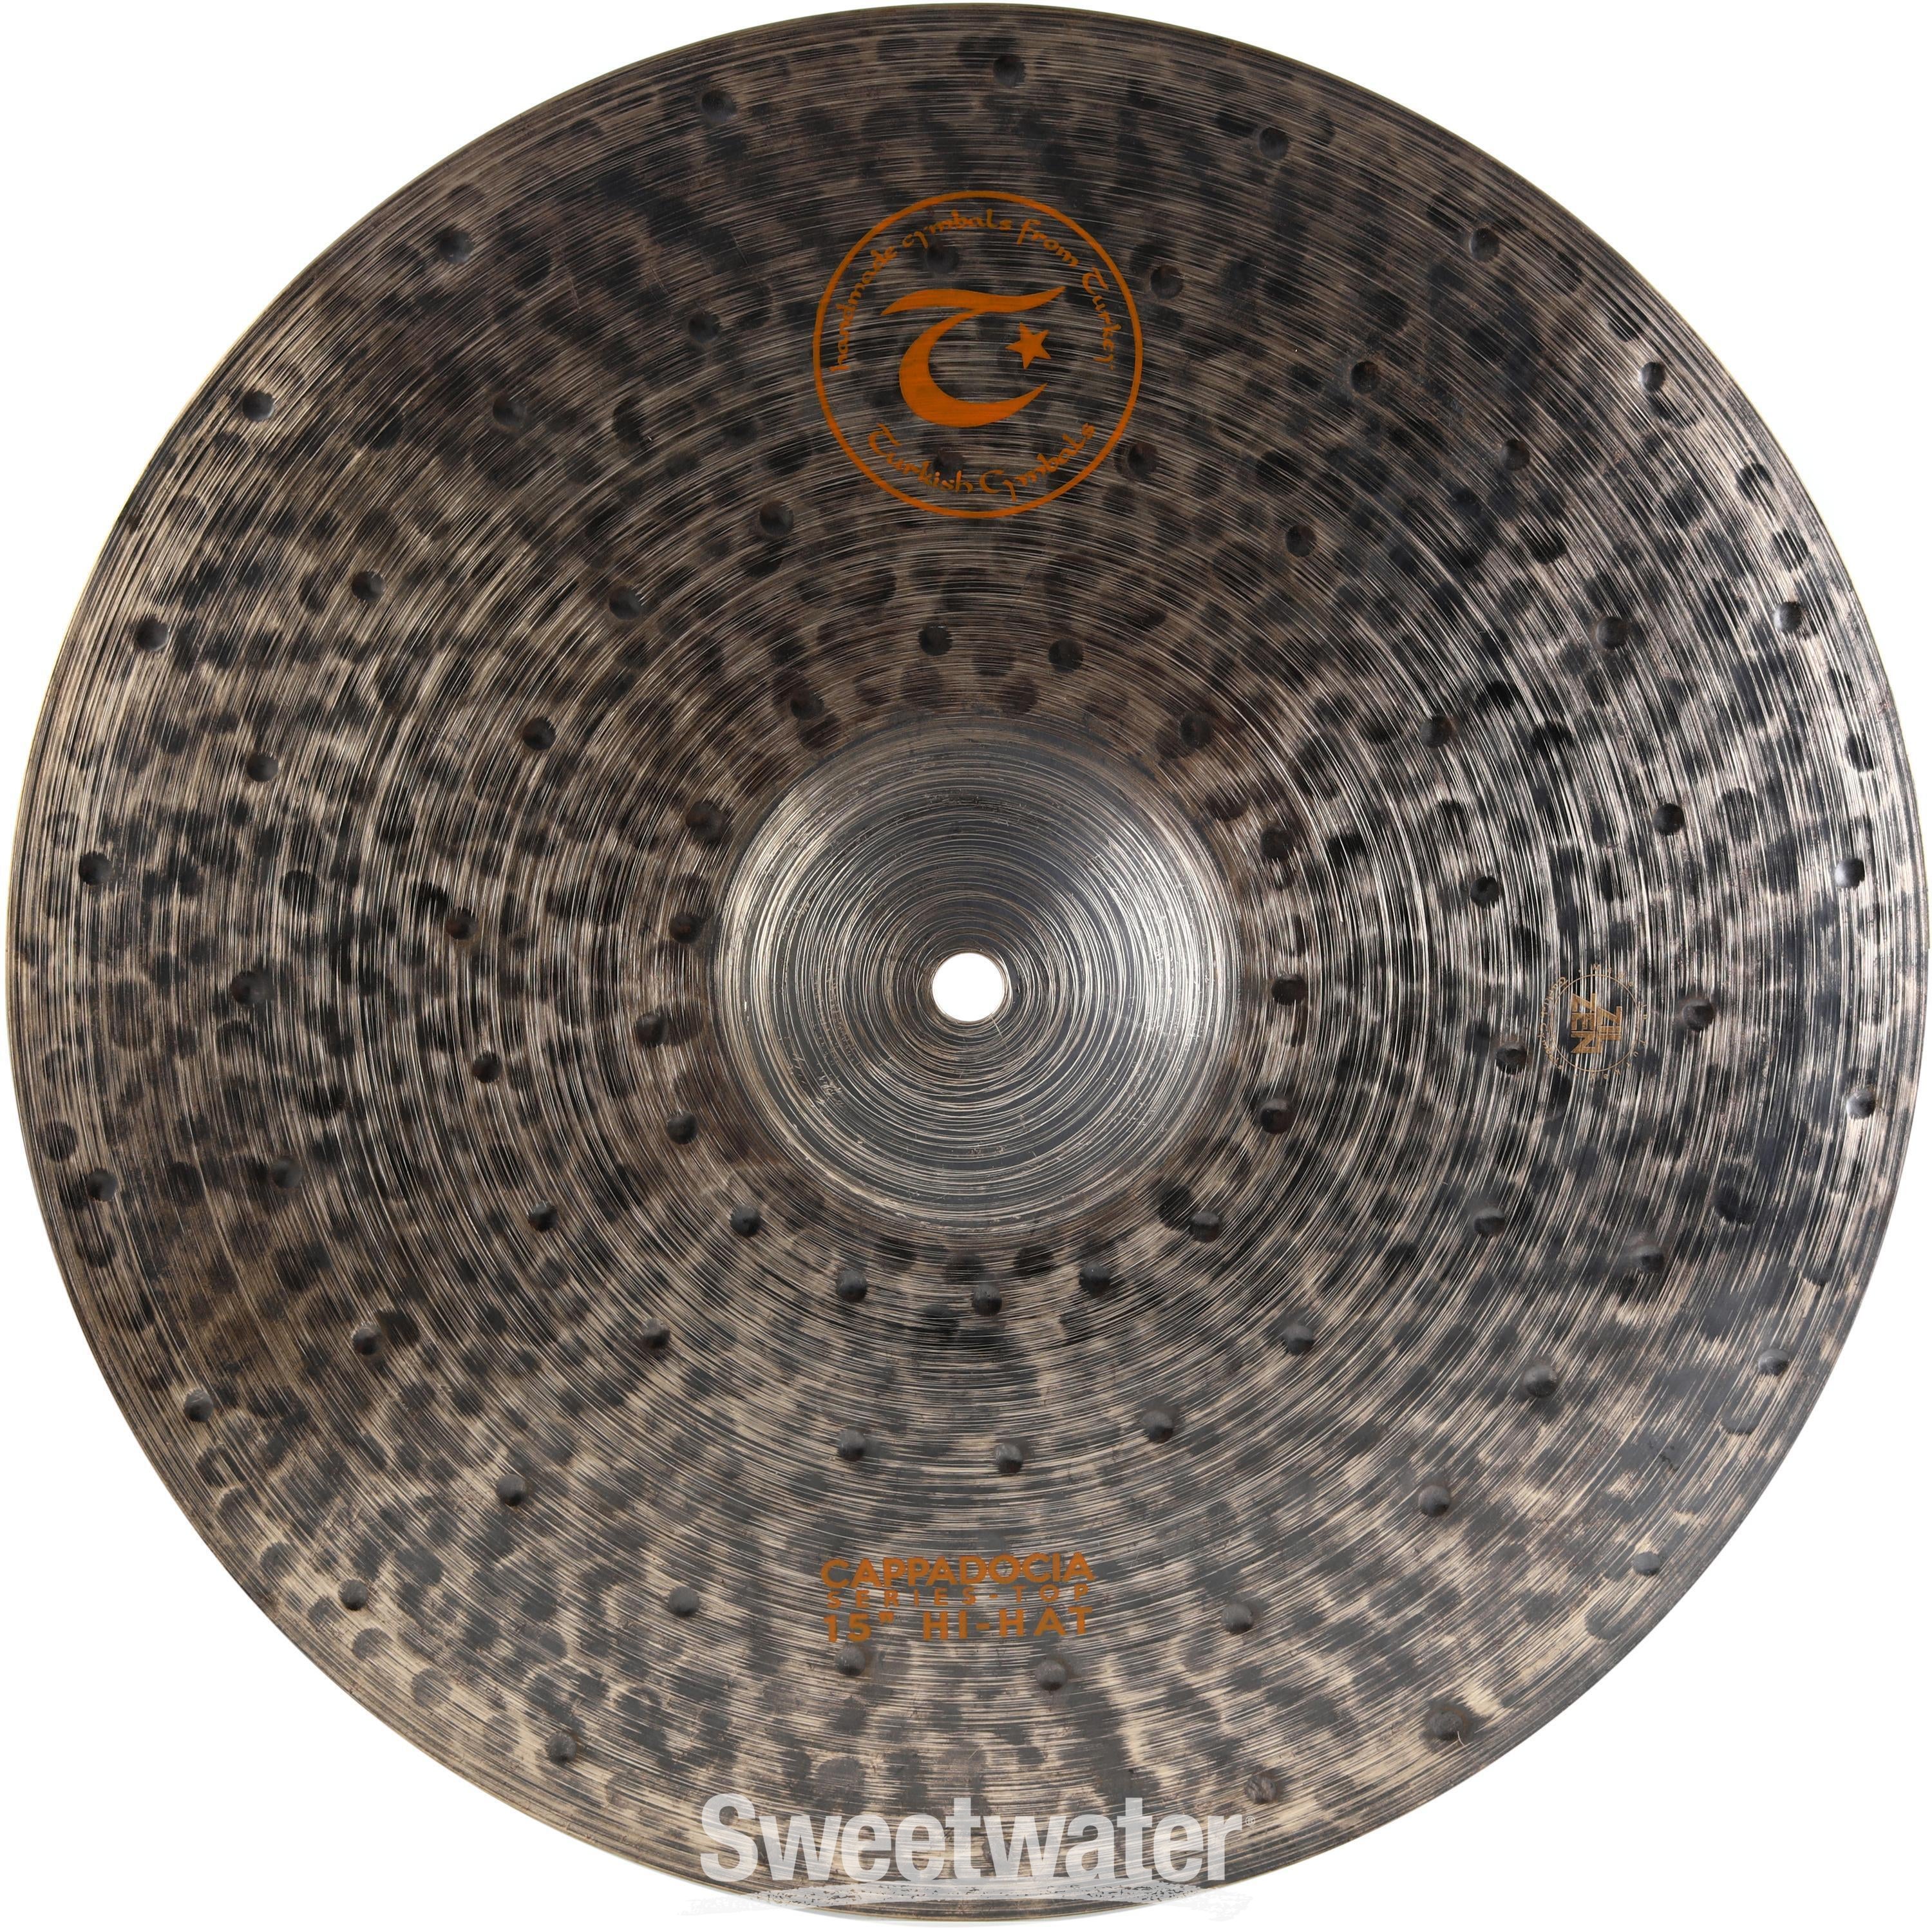 Turkish Cymbals Cappadocia Hi-hat Cymbals - 15 inch | Sweetwater